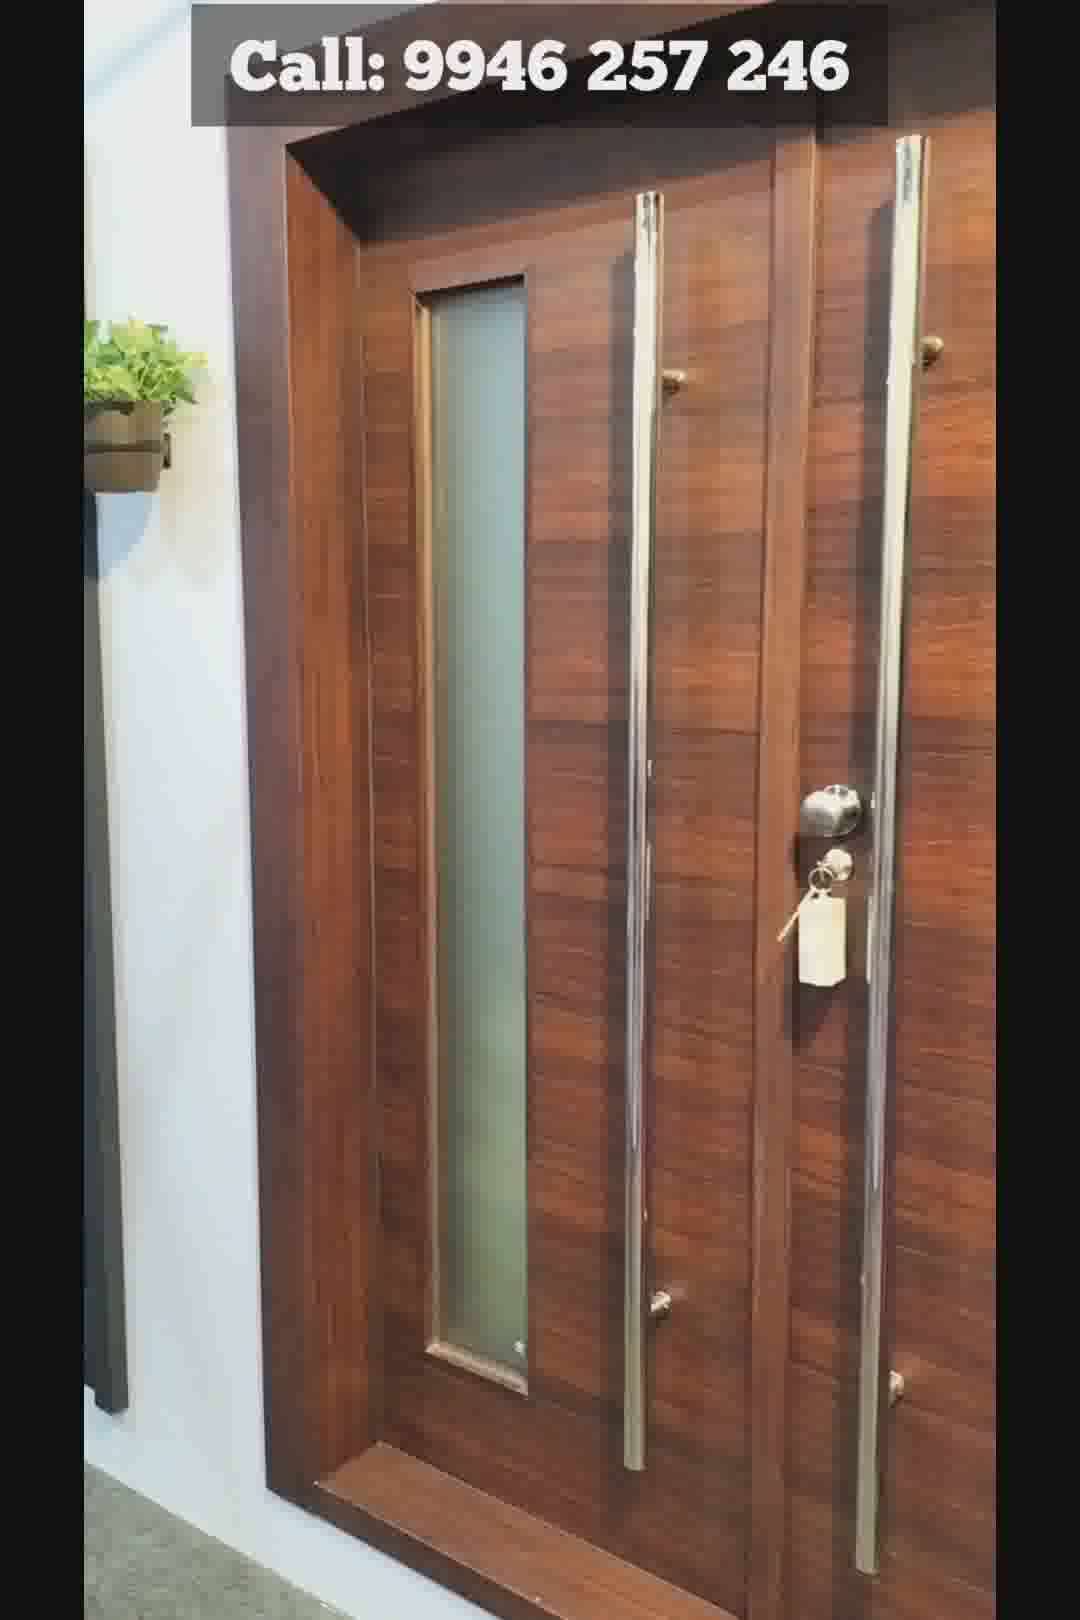 Steel Doors | All Kerala Available | 9946 257 246

#Doors #steeldoors #koloapp #trendig #kolodiscussions